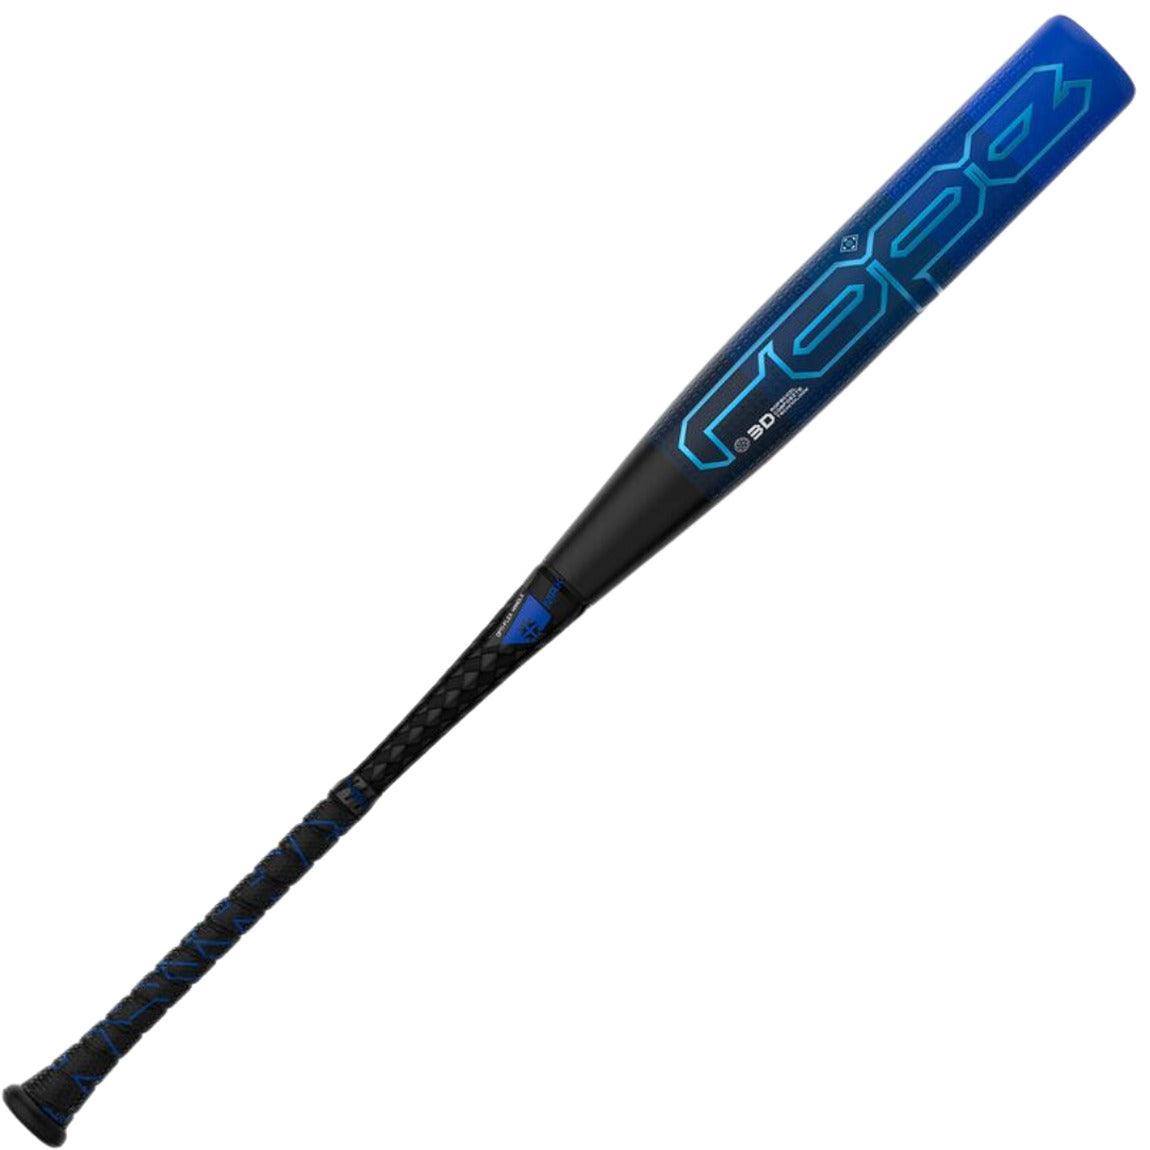 Easton Rope 2 5/8" (-3) BBCOR Baseball Bat